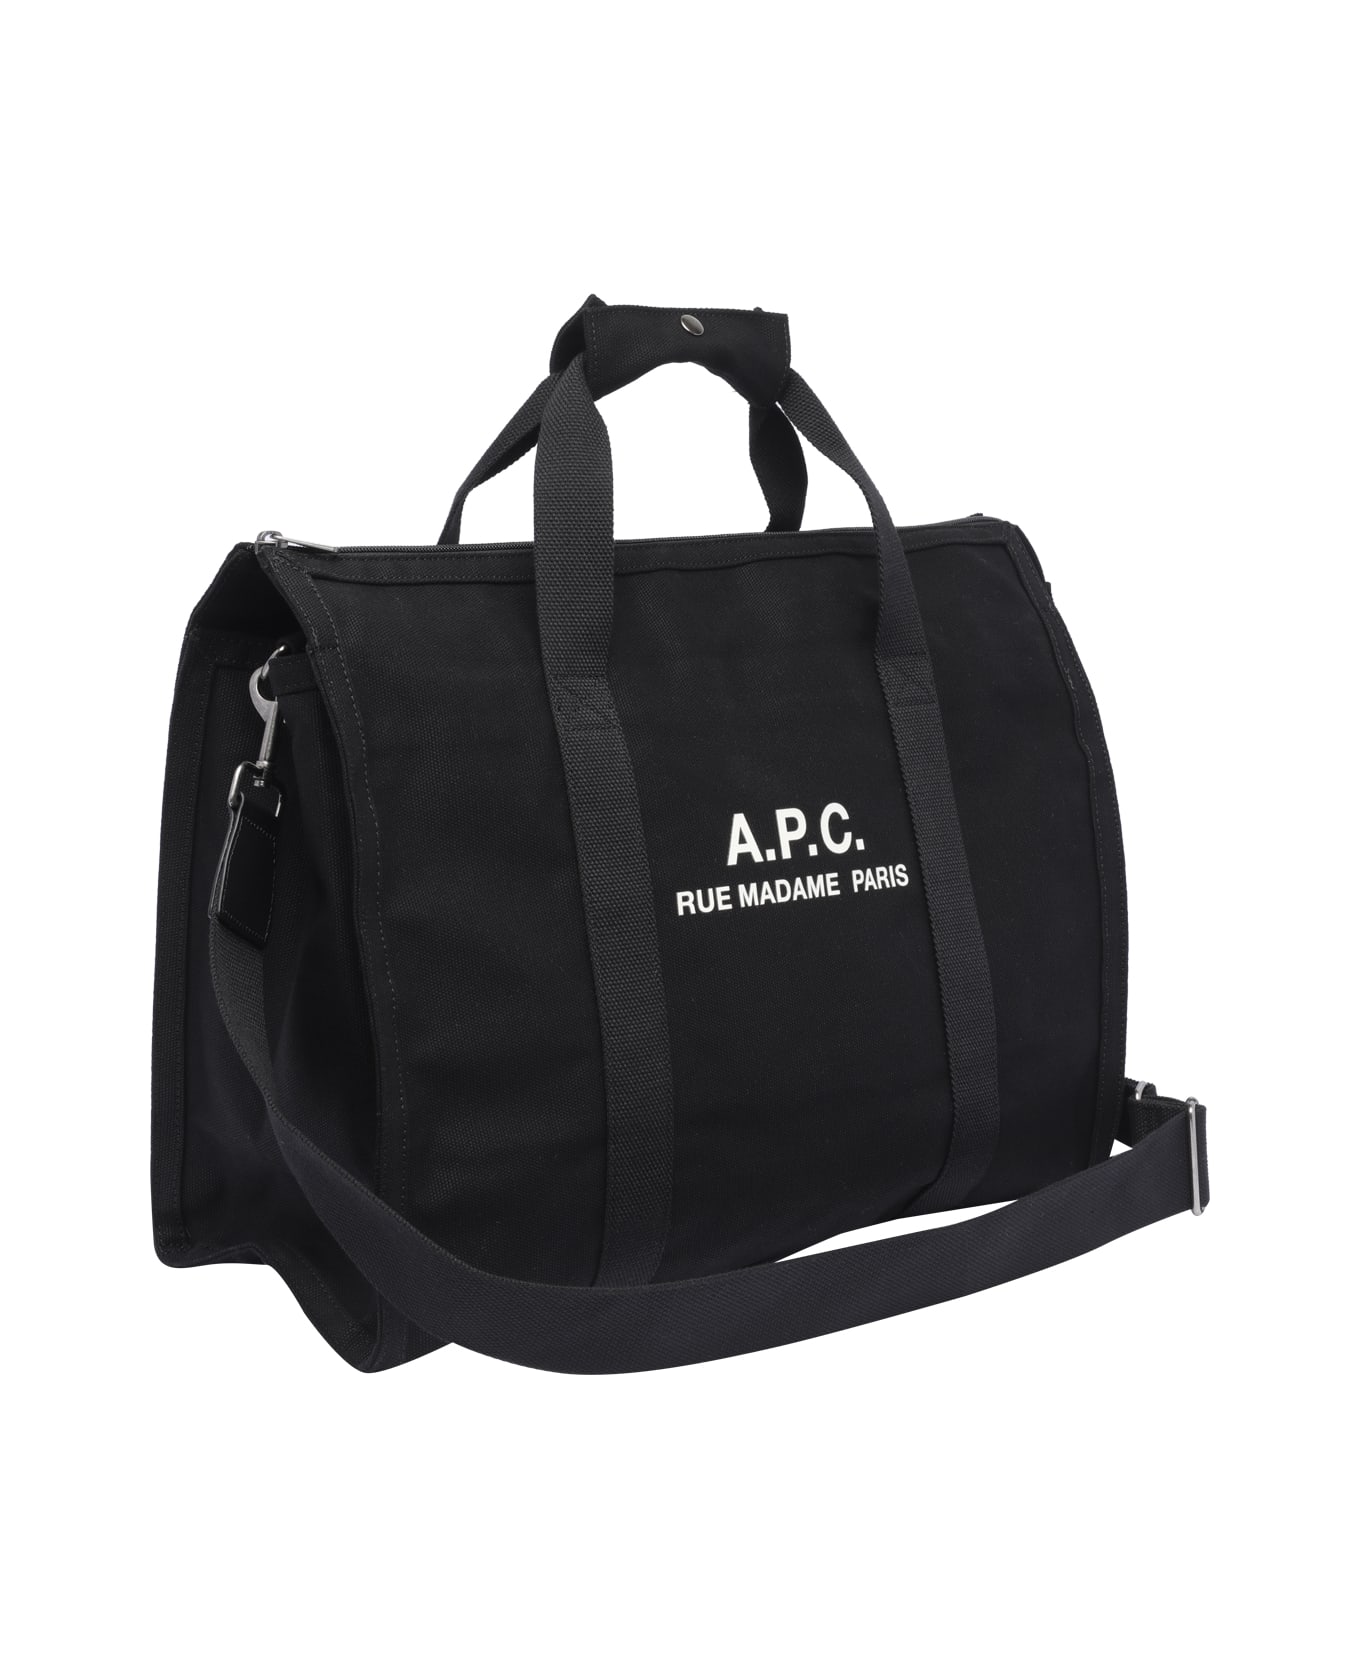 A.P.C. Gym Bag Recuperation - Black トラベルバッグ